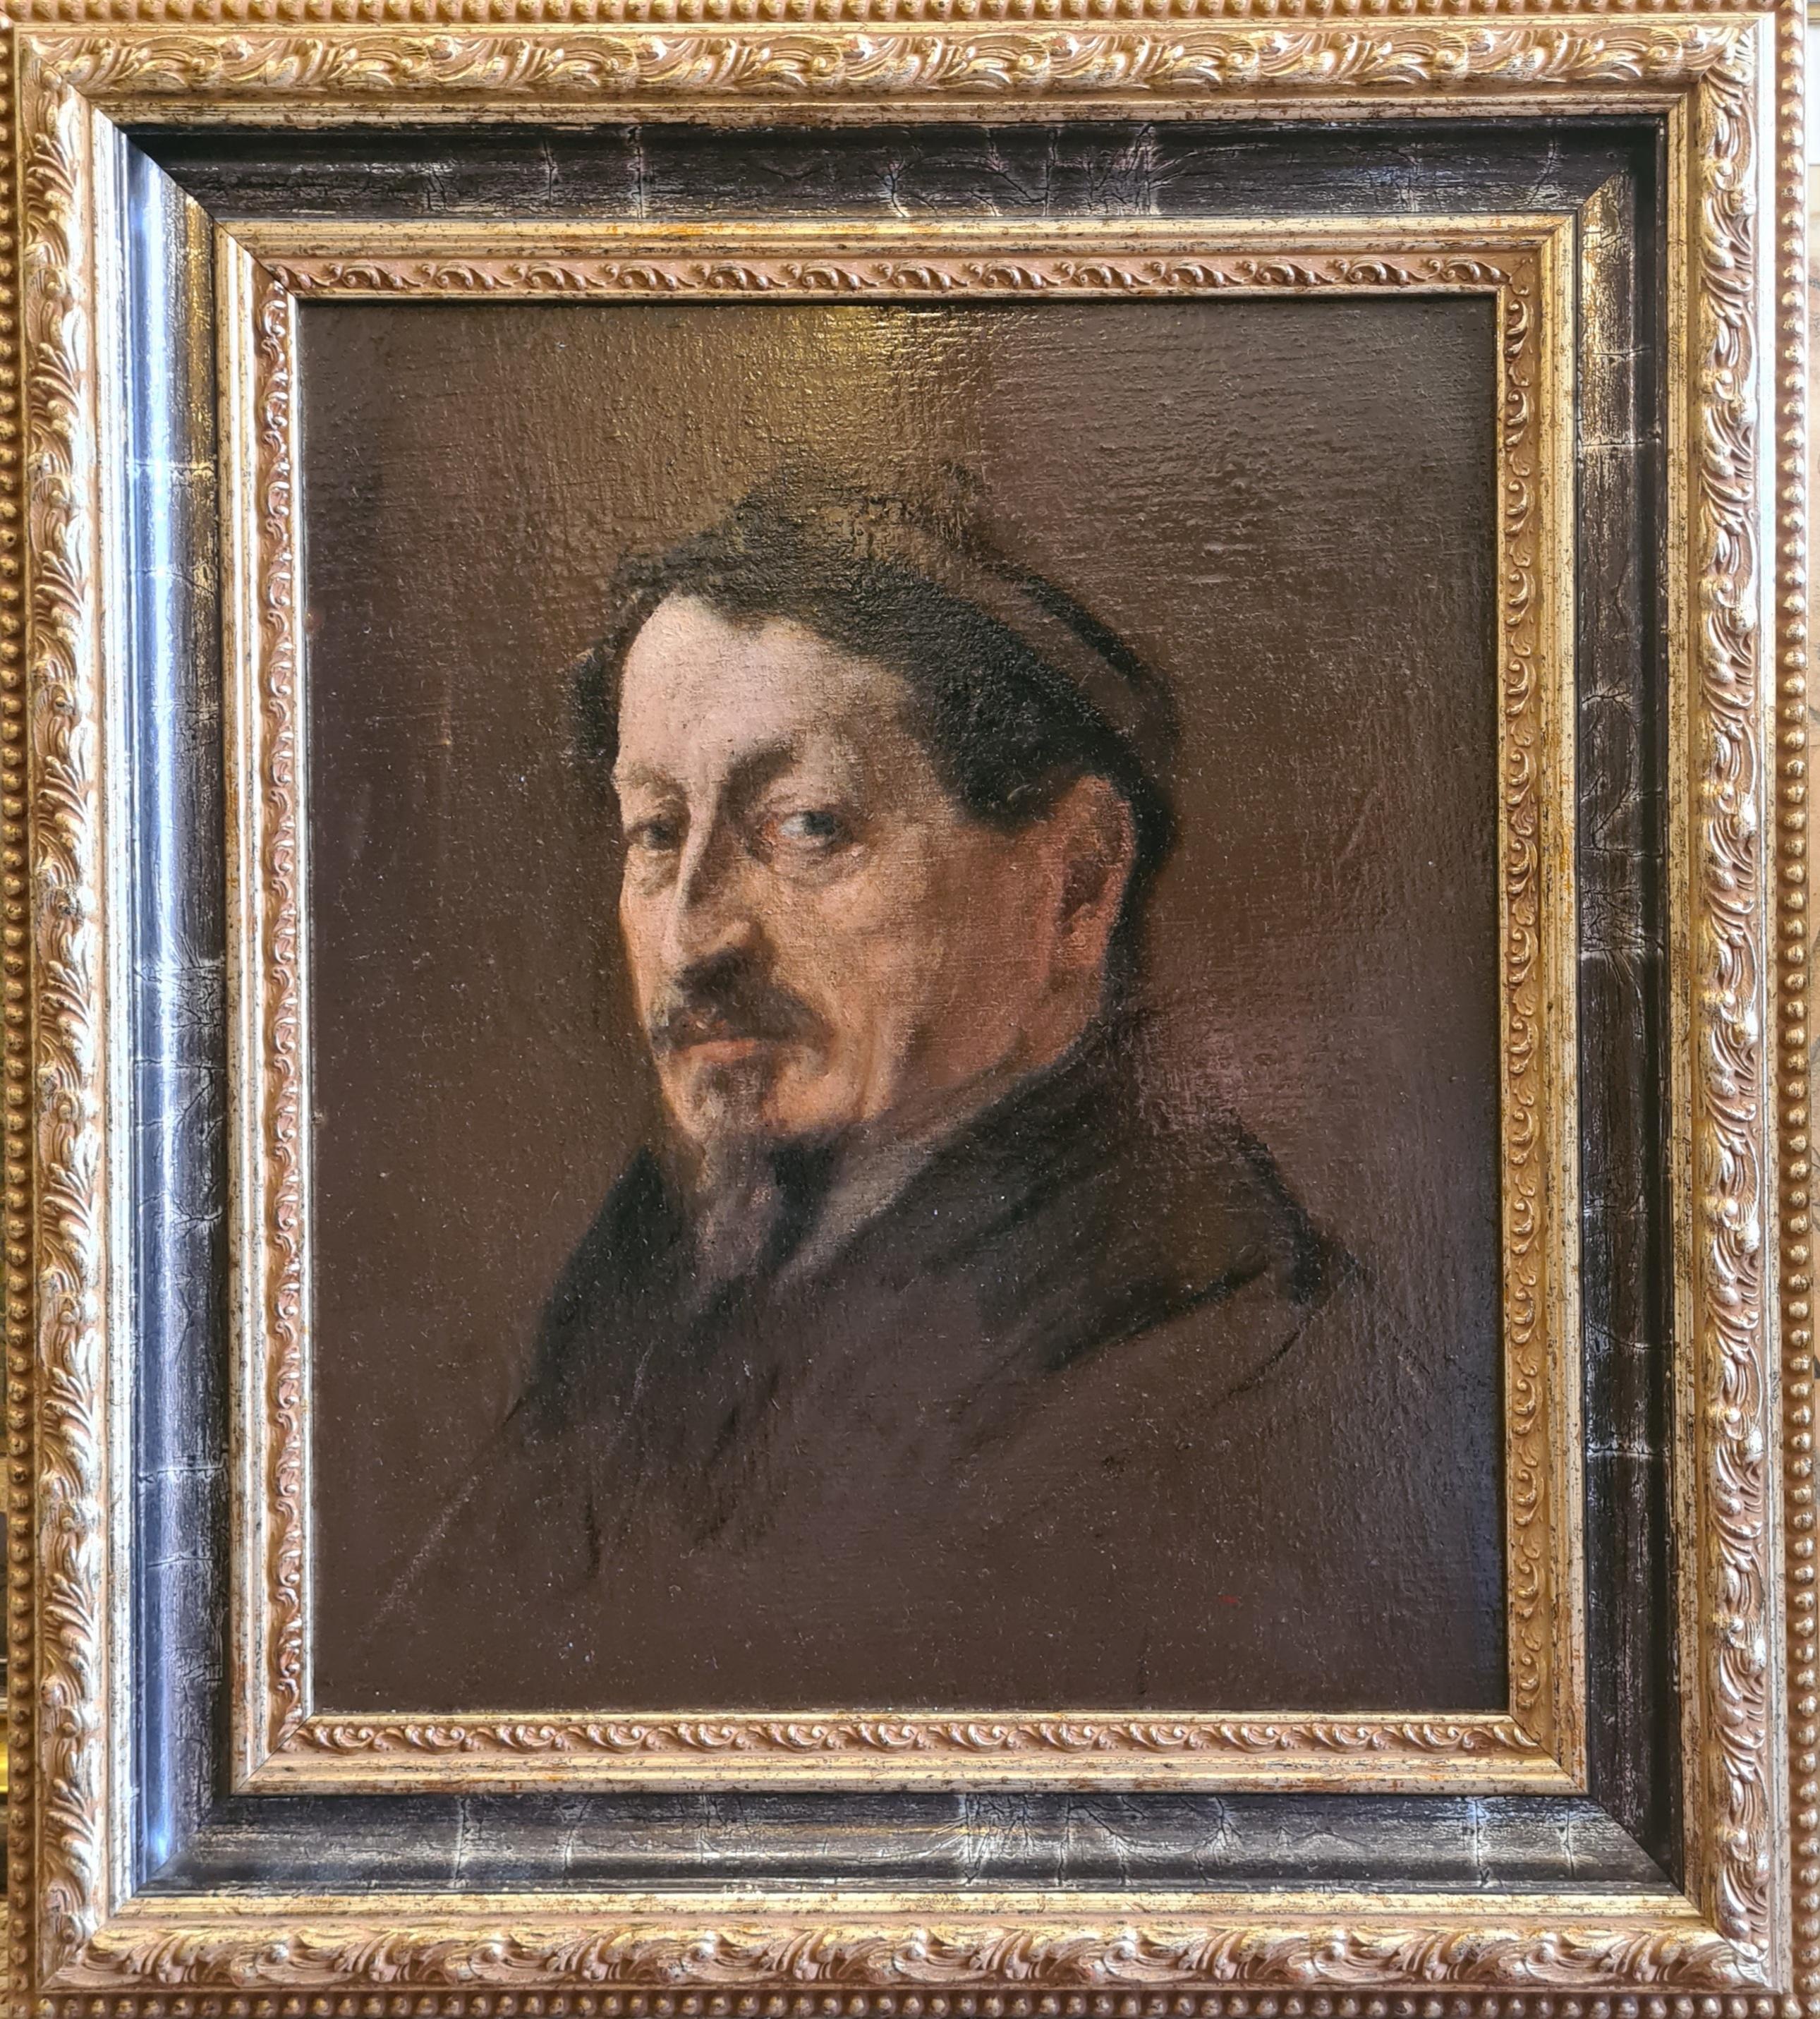  Charles Emile Auguste Carolus-Duran Portrait Painting - 19th Century Oil, Study for a Portrait of Emile Baron